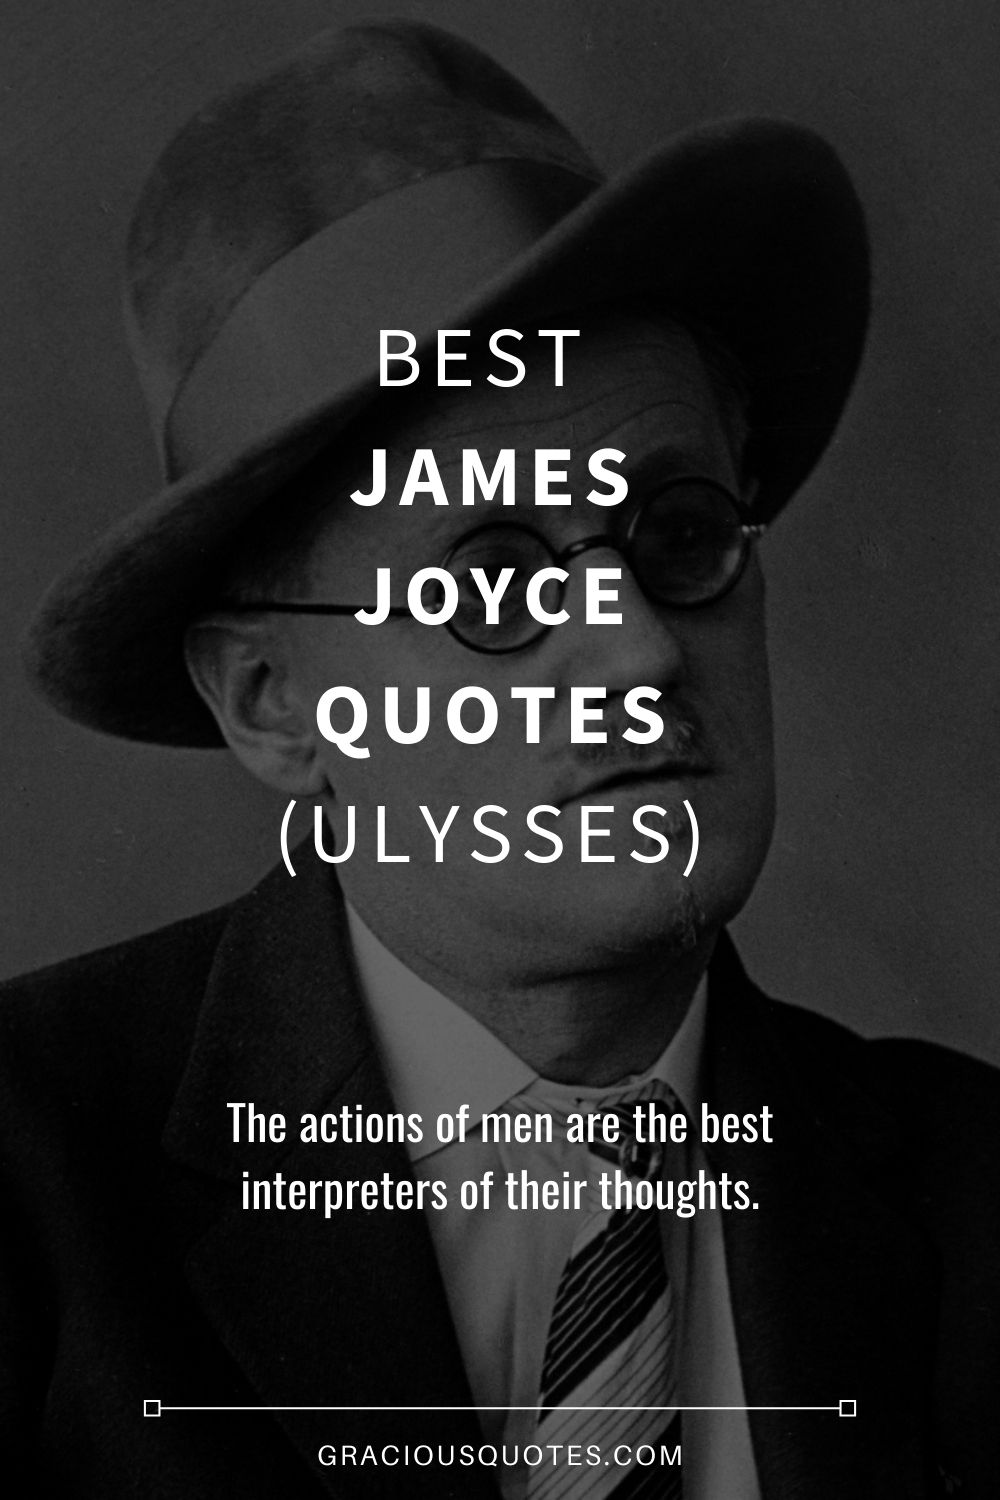 Best James Joyce Quotes (ULYSSES) - Gracious Quotes